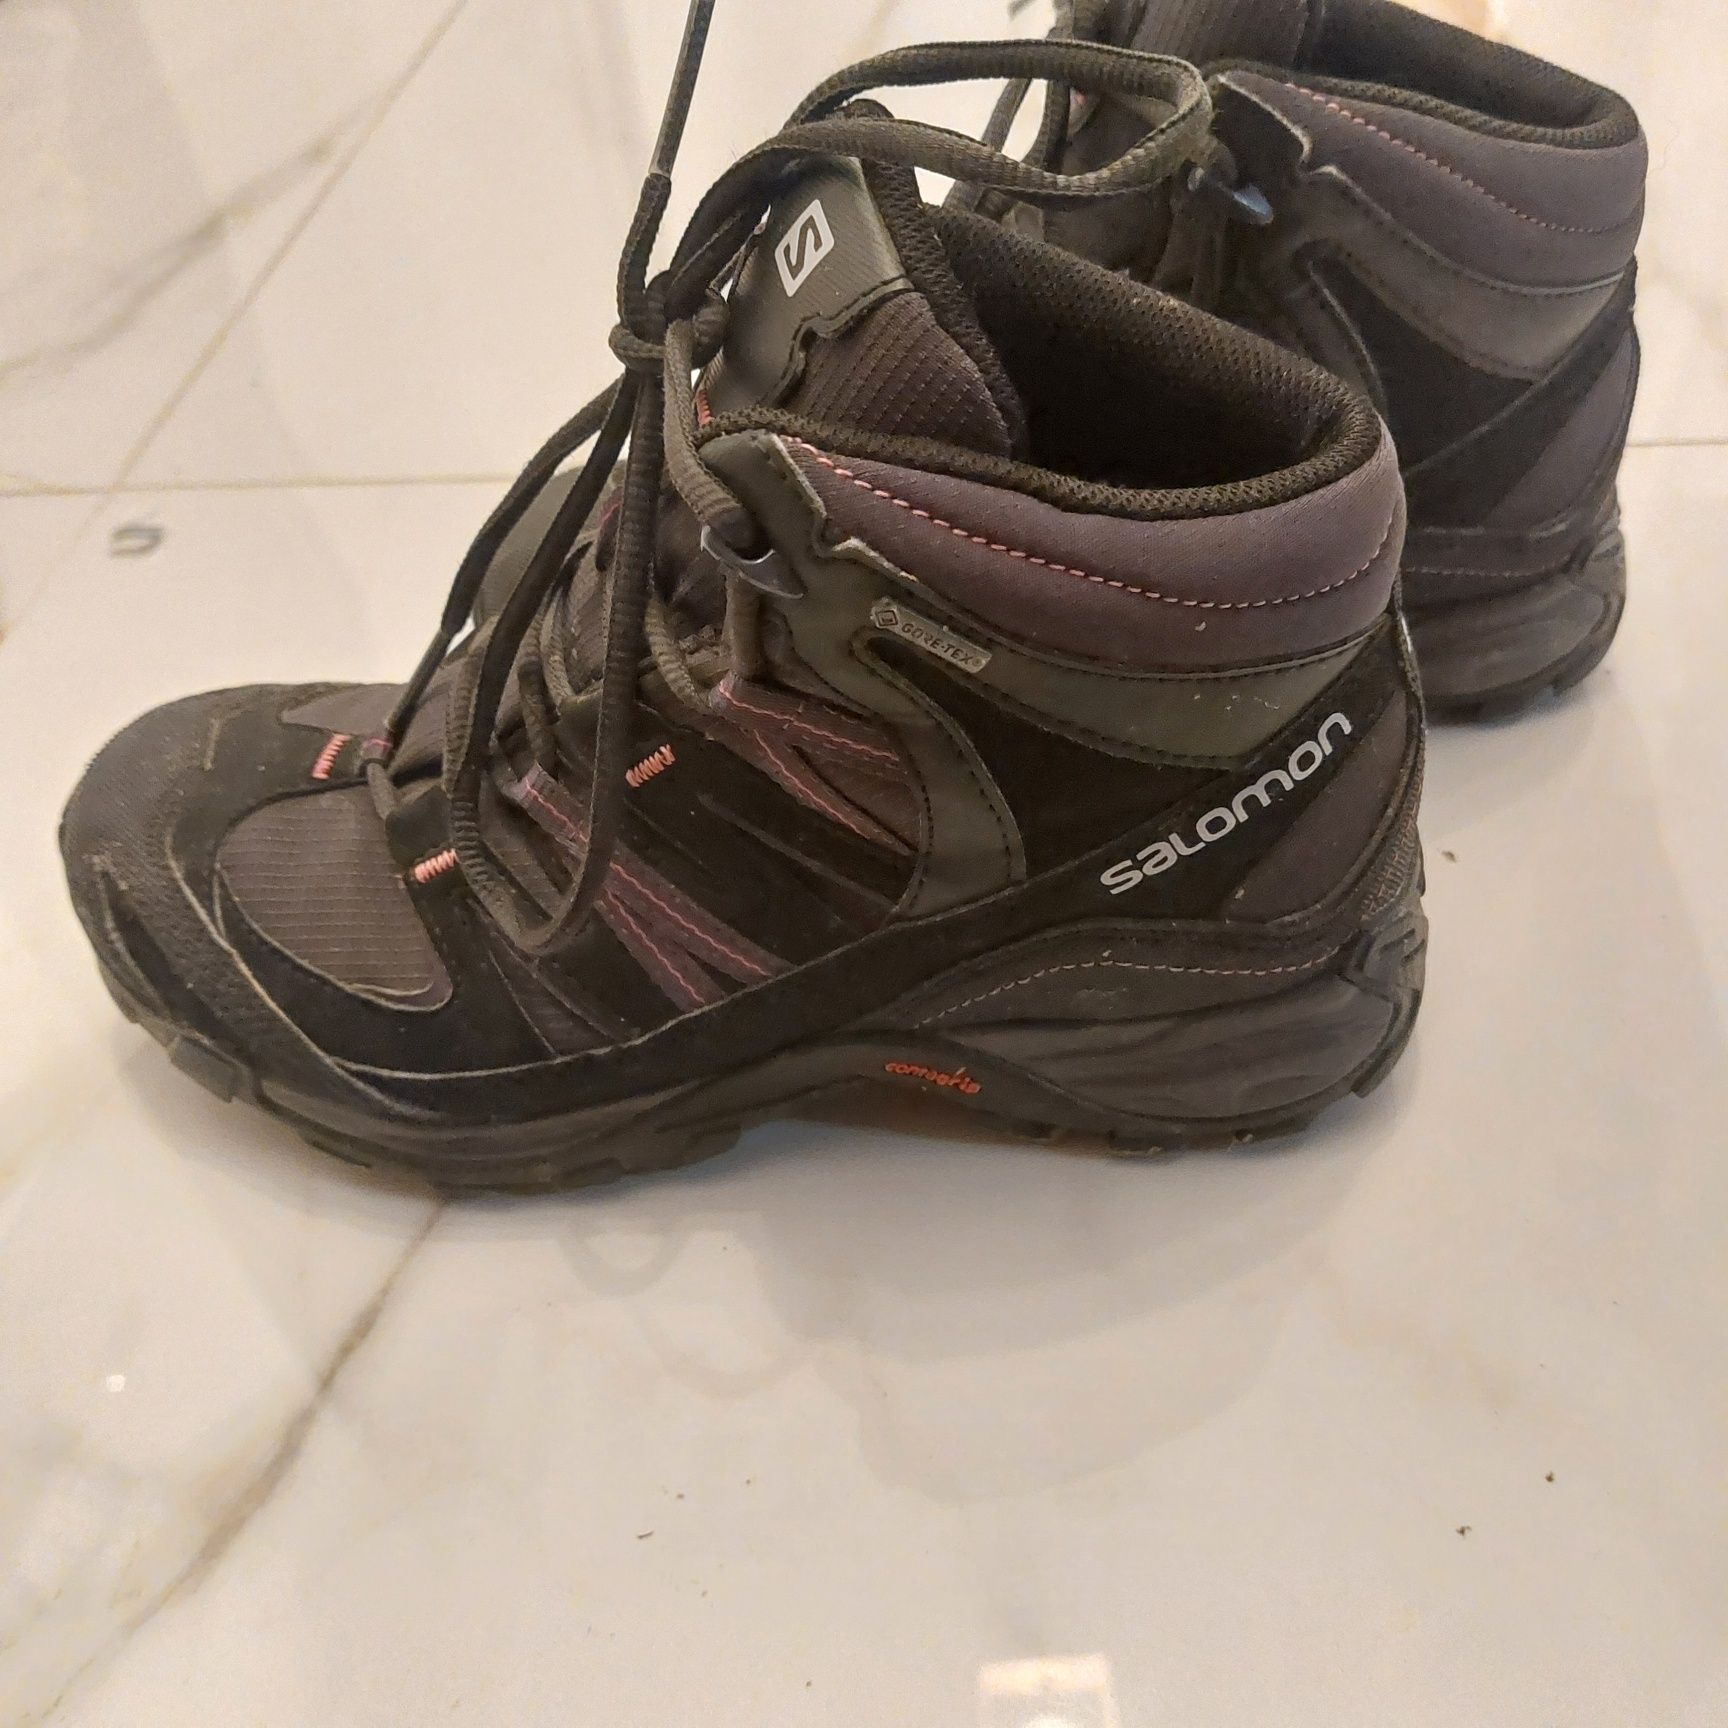 Salomon buty trekkingowe 37 1/3 damskie